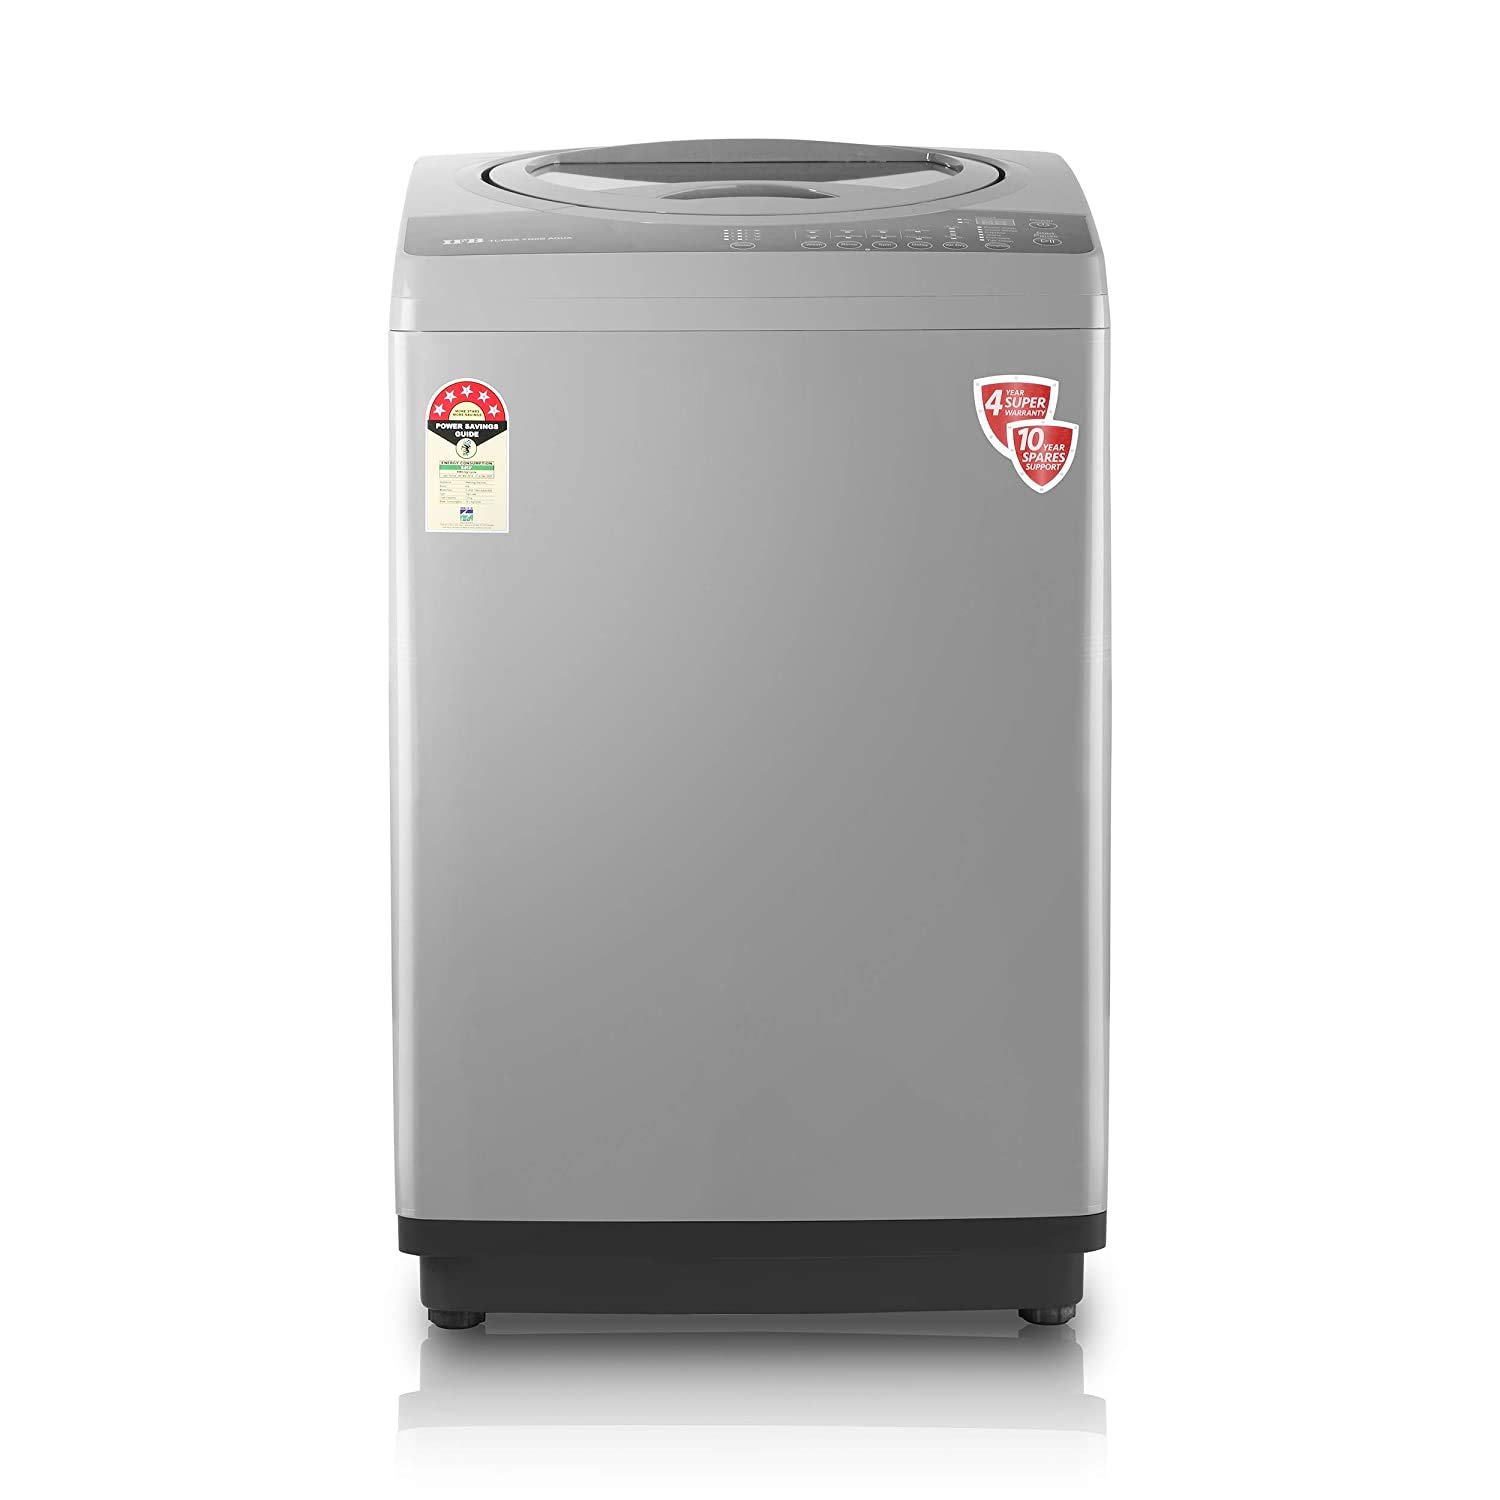 IFB Top Load Automatic Washing Machine 7.0 Kg 5 Star TL-RGS Aqua Grey